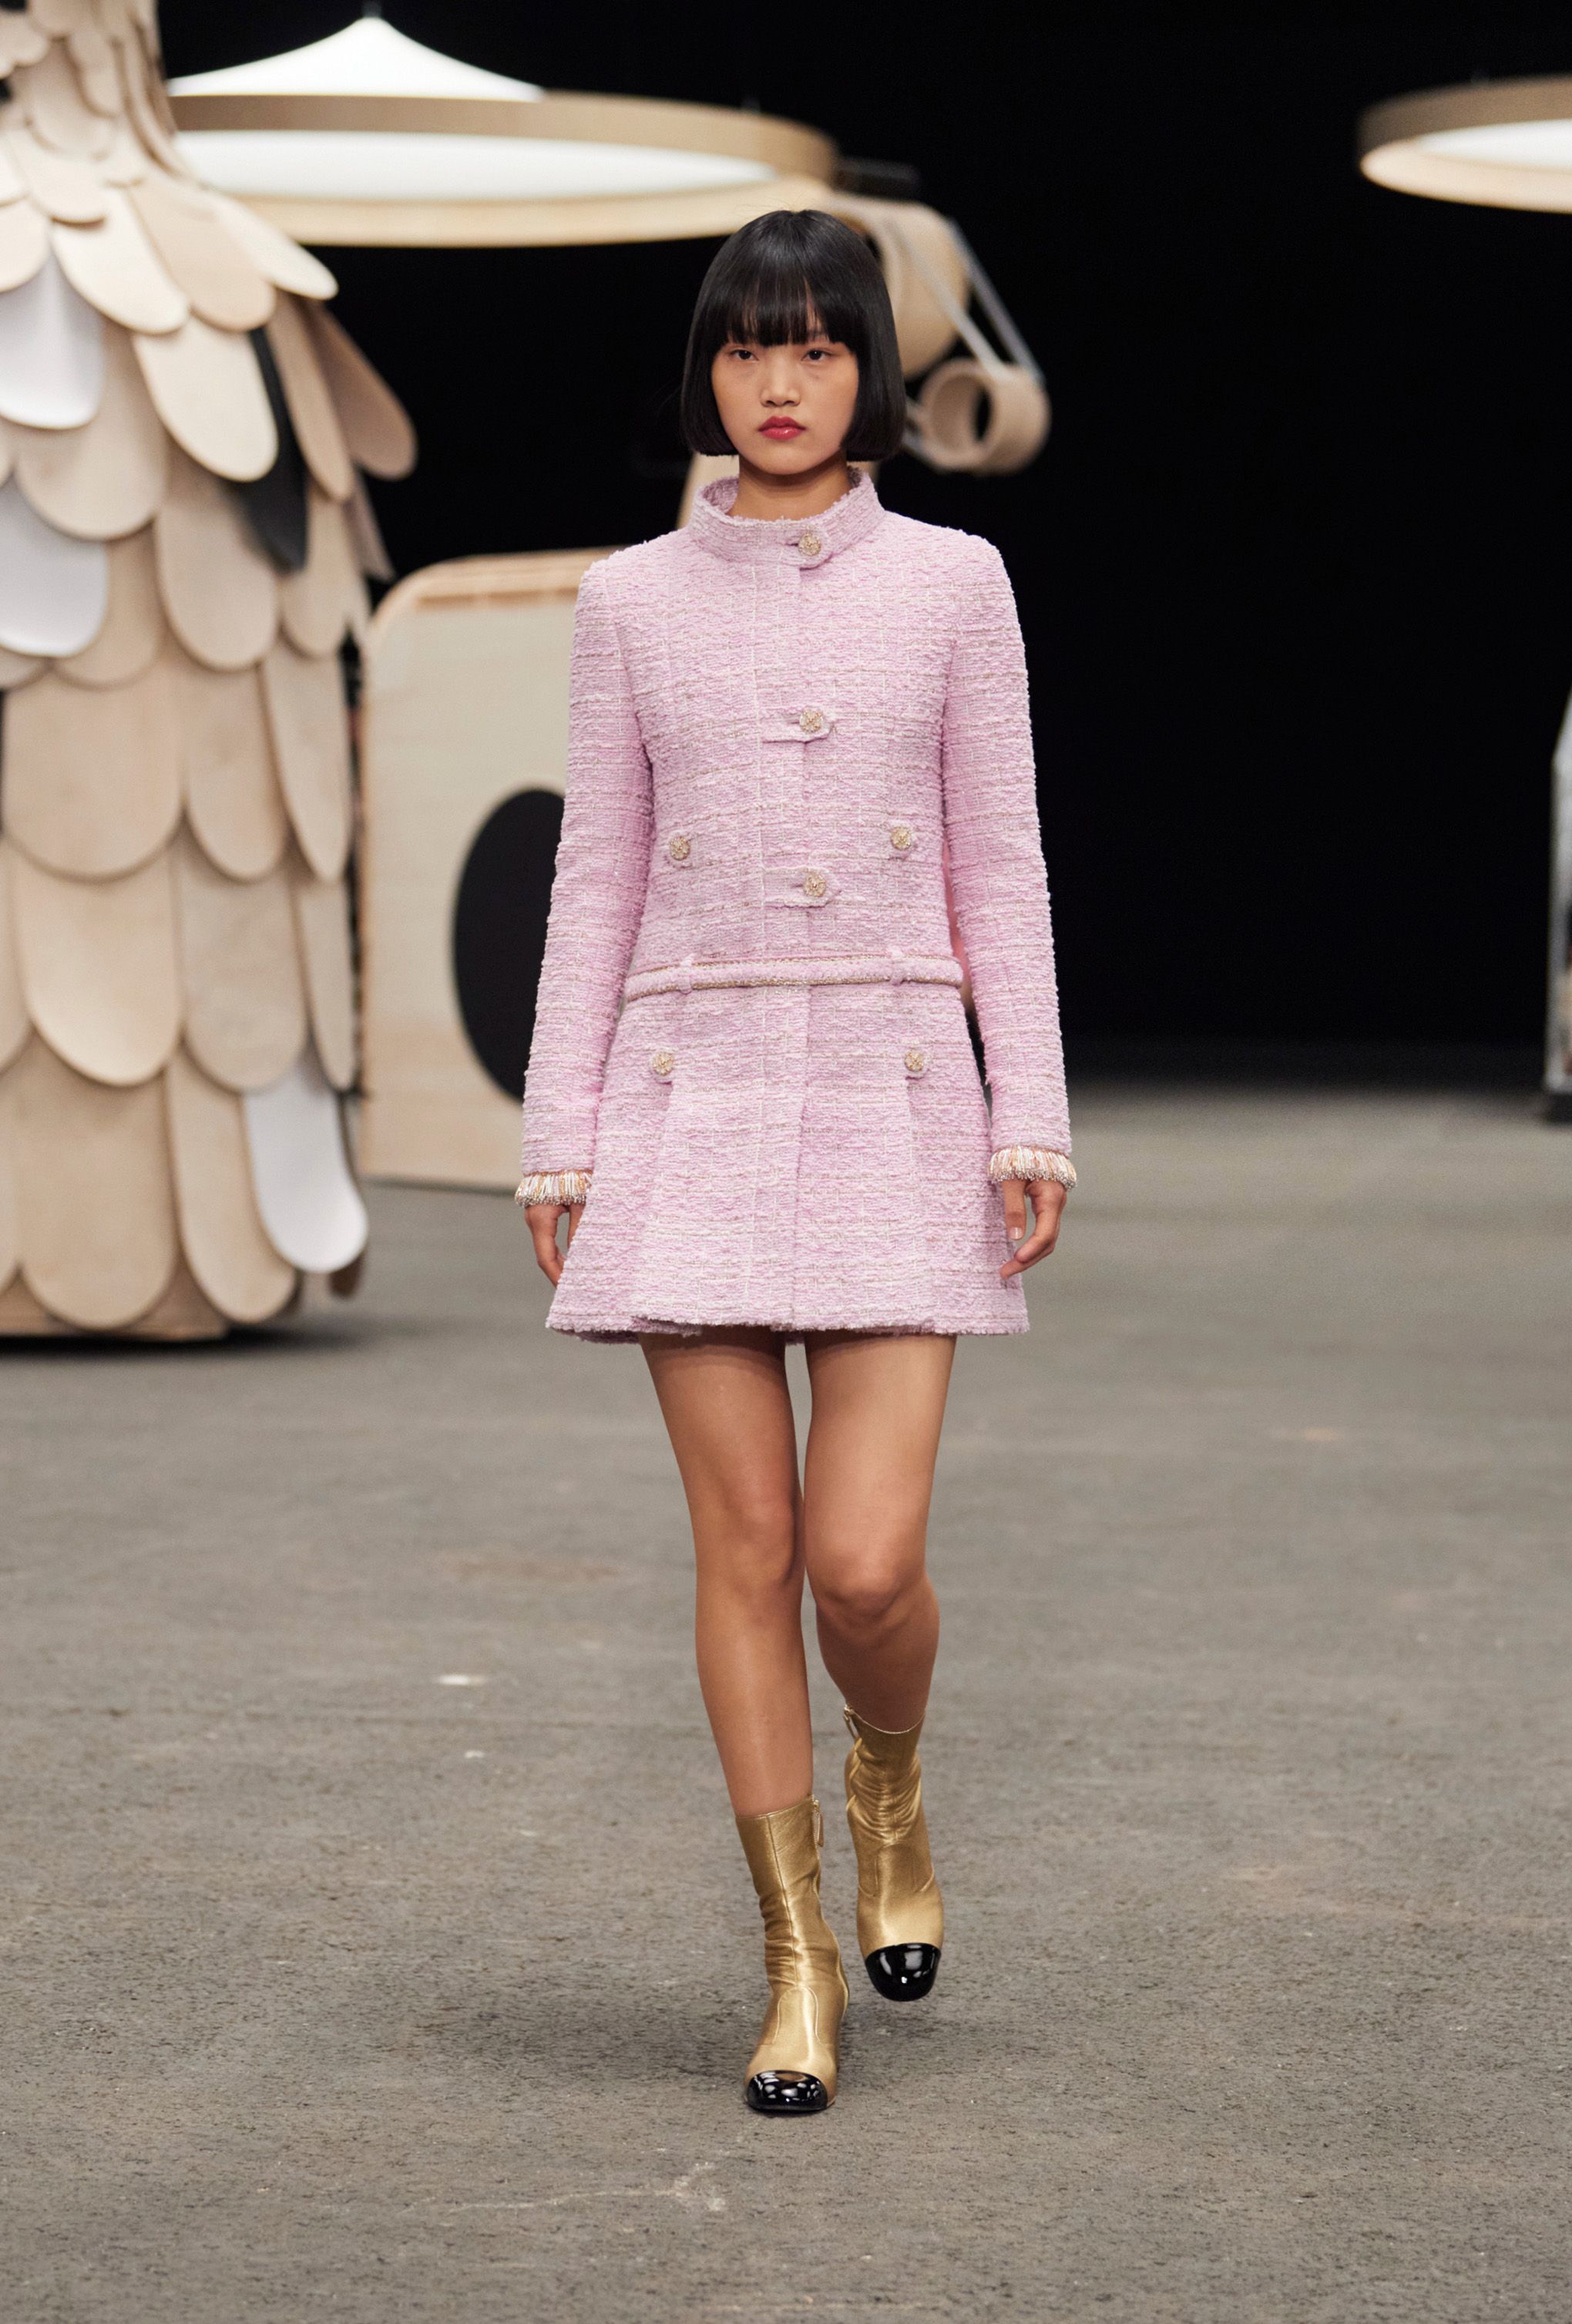 Chanels Spring Collection Was Inspired by Kristen Stewart  WWD